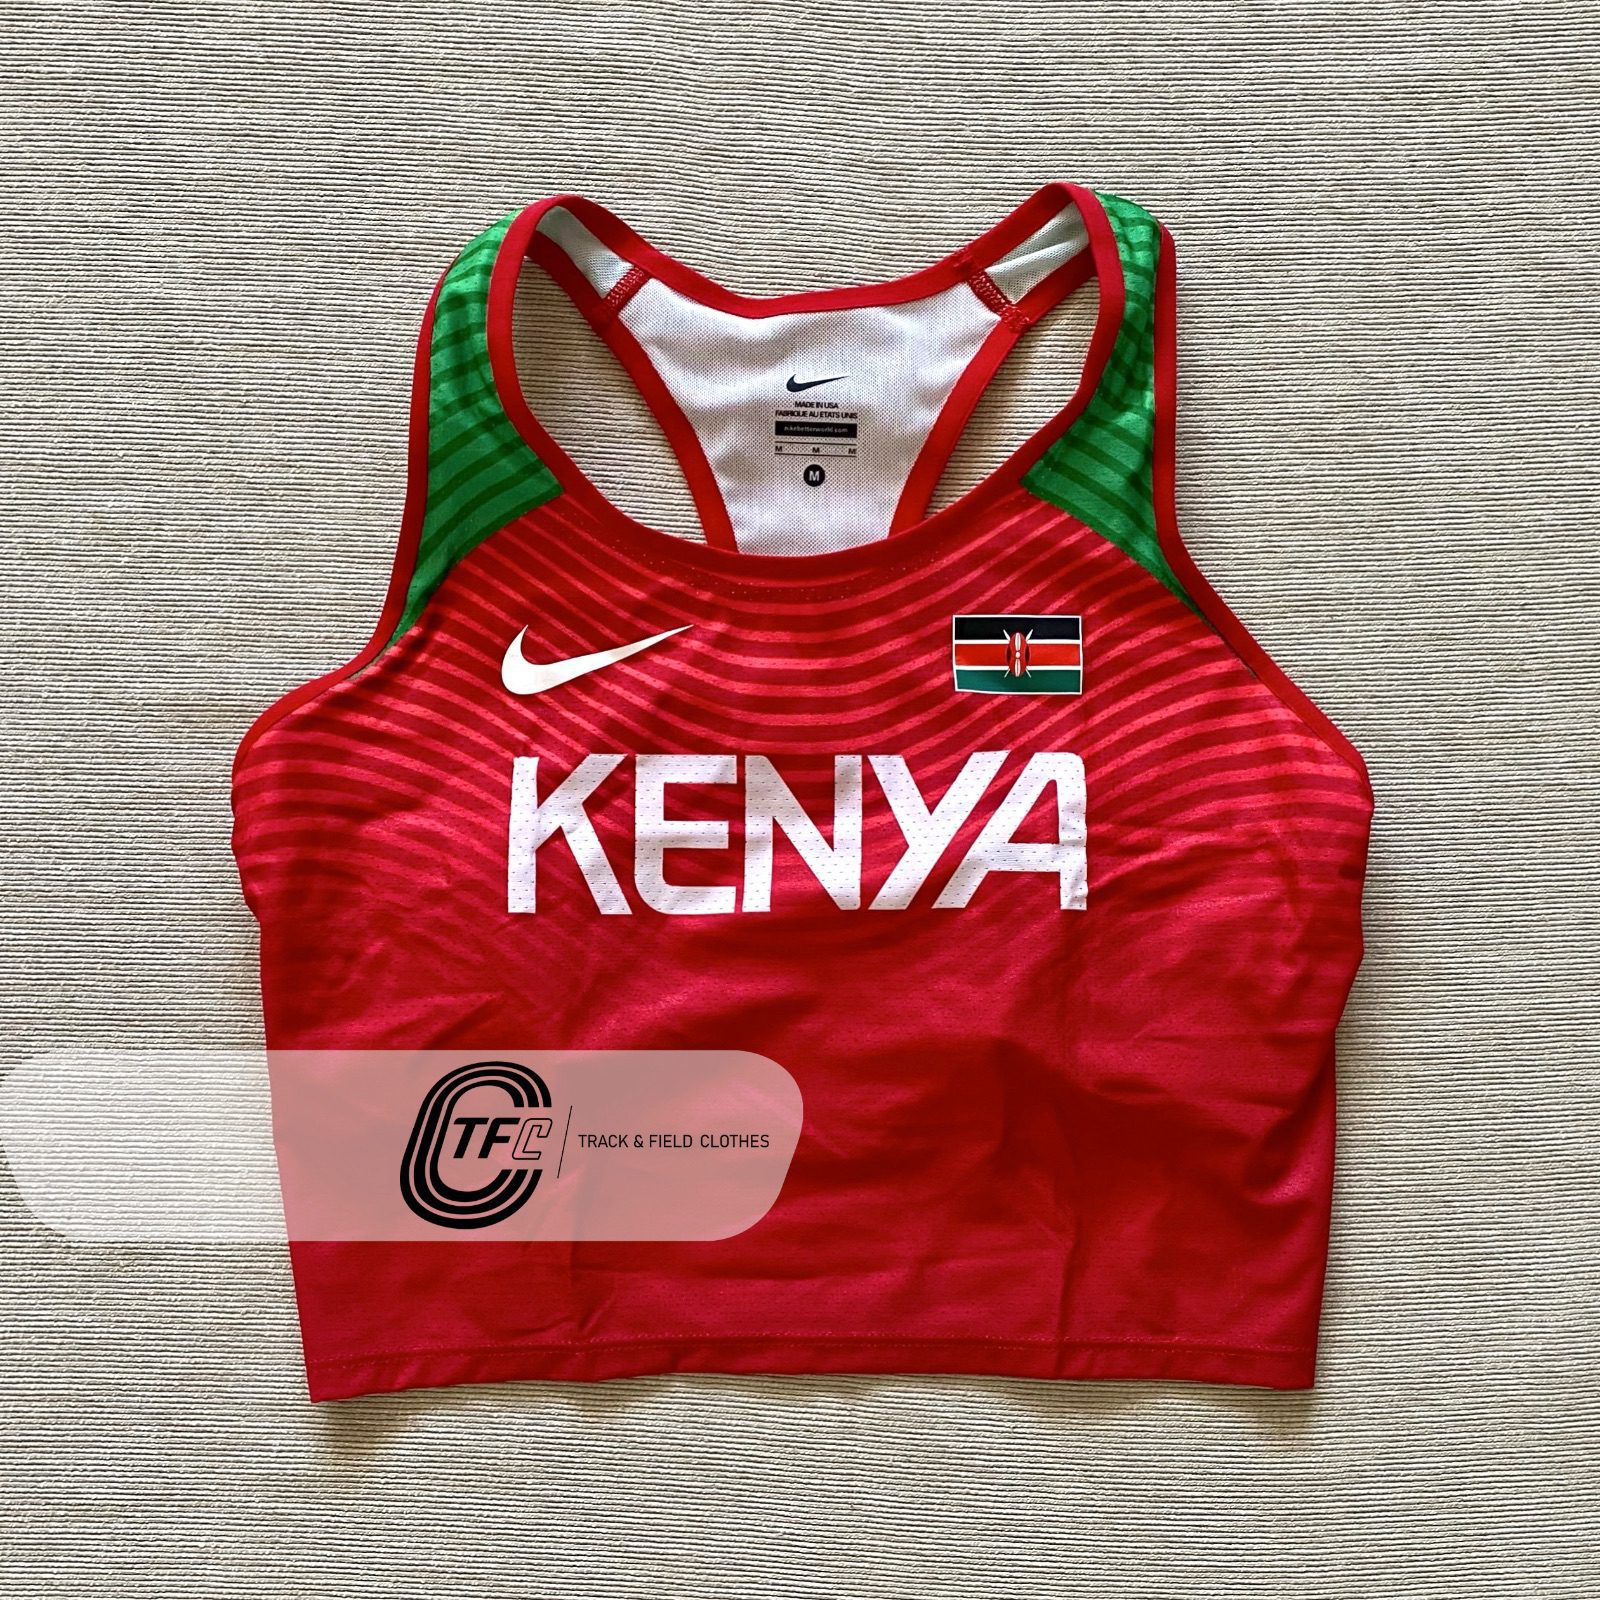 2019 Kenya International Team Pro Top | Trackandfieldclothes